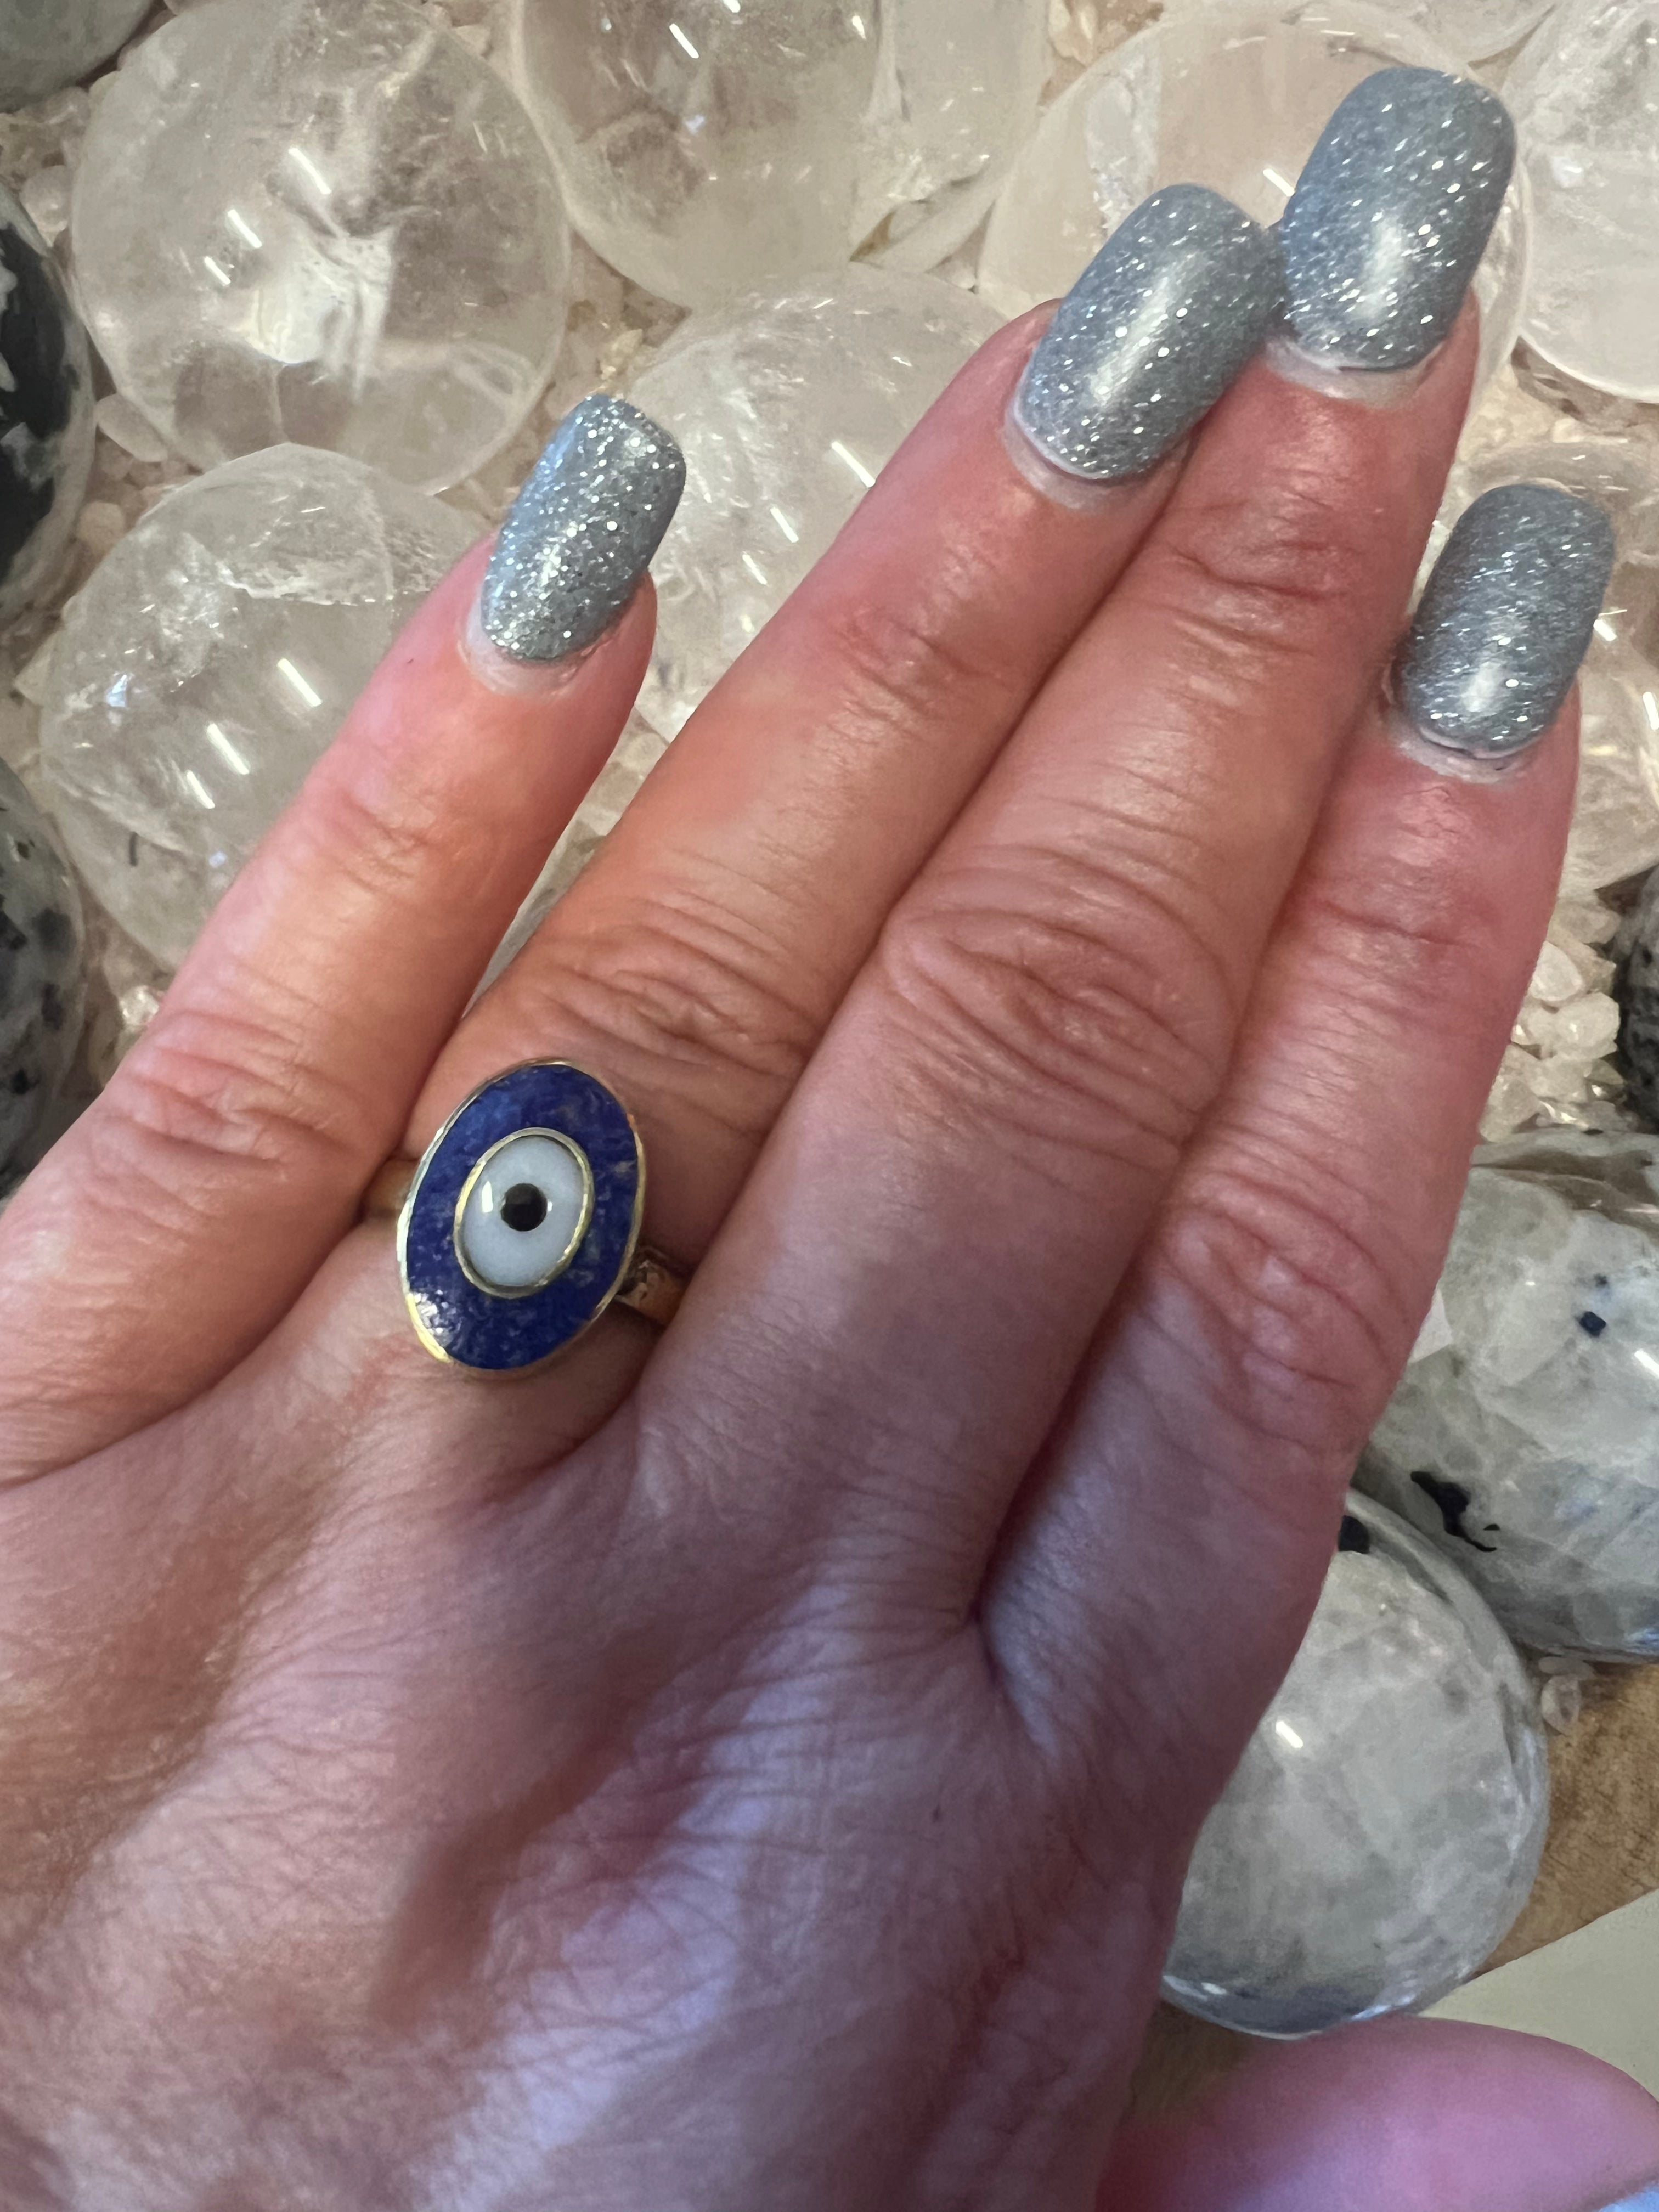 Brass Evil Eye Blue Adjustable Ring Lapis Lazuli